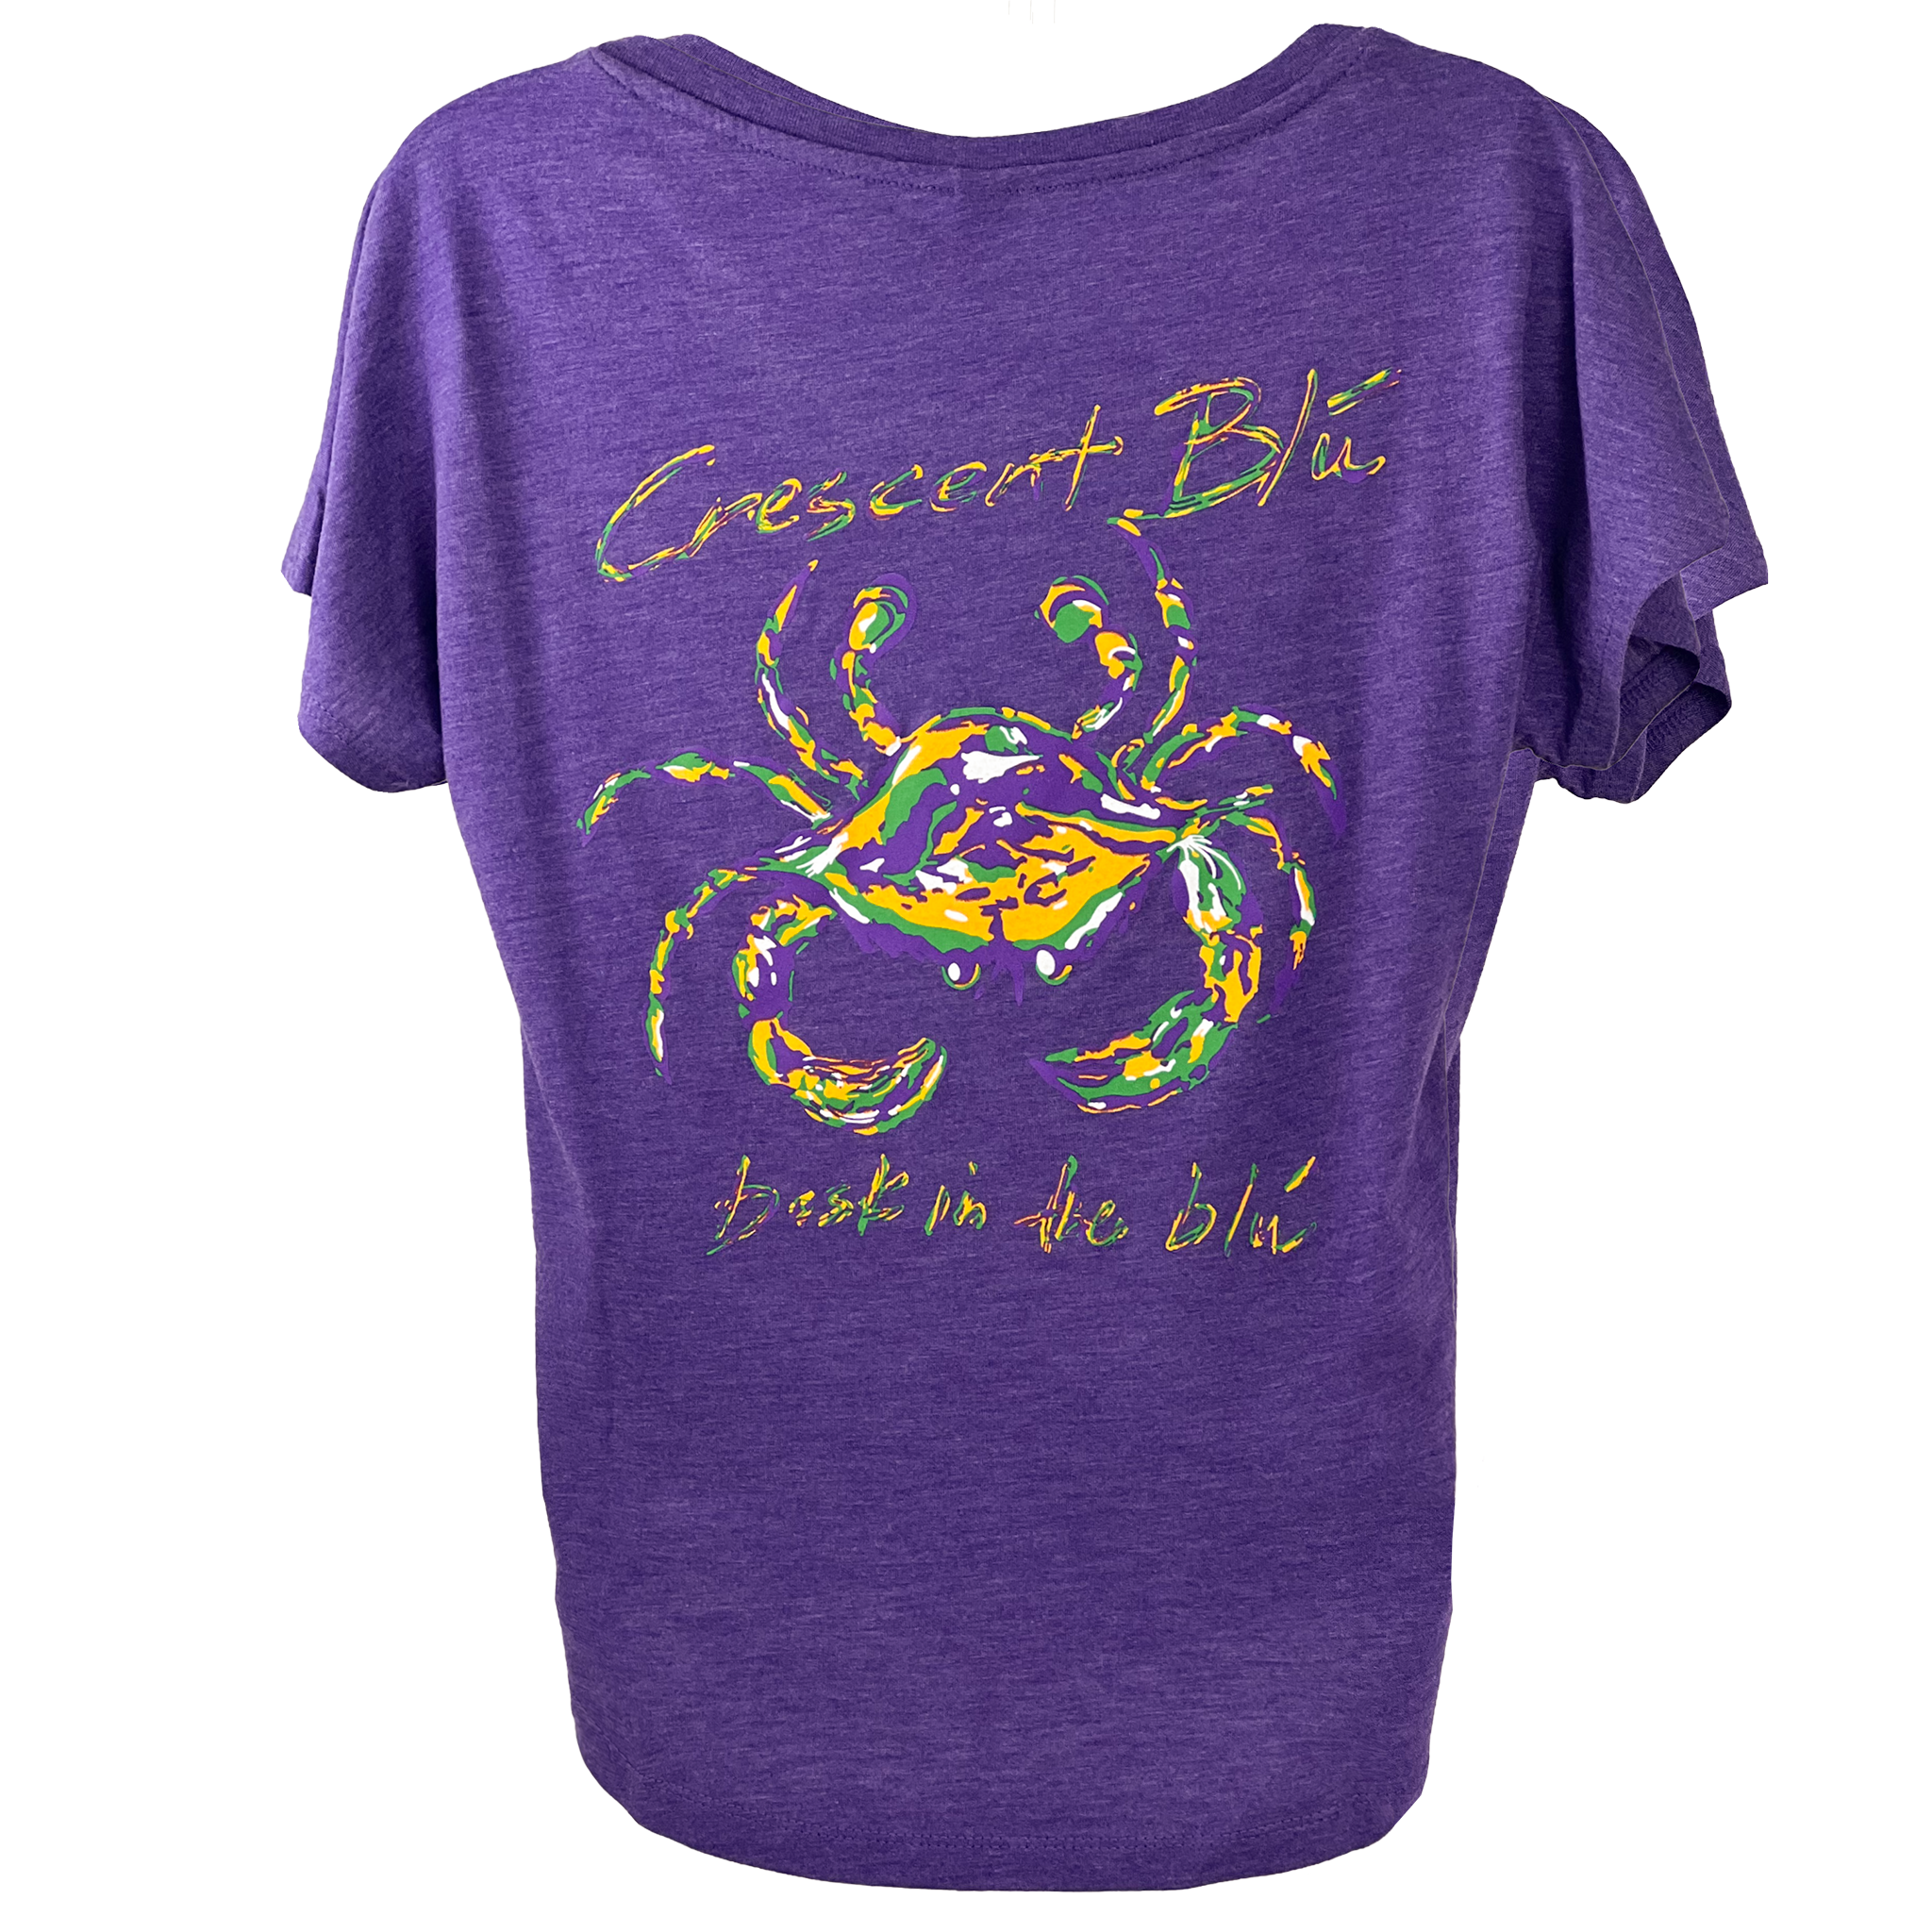 The back of a flowy purple womens Mardi Mras t-shirt.